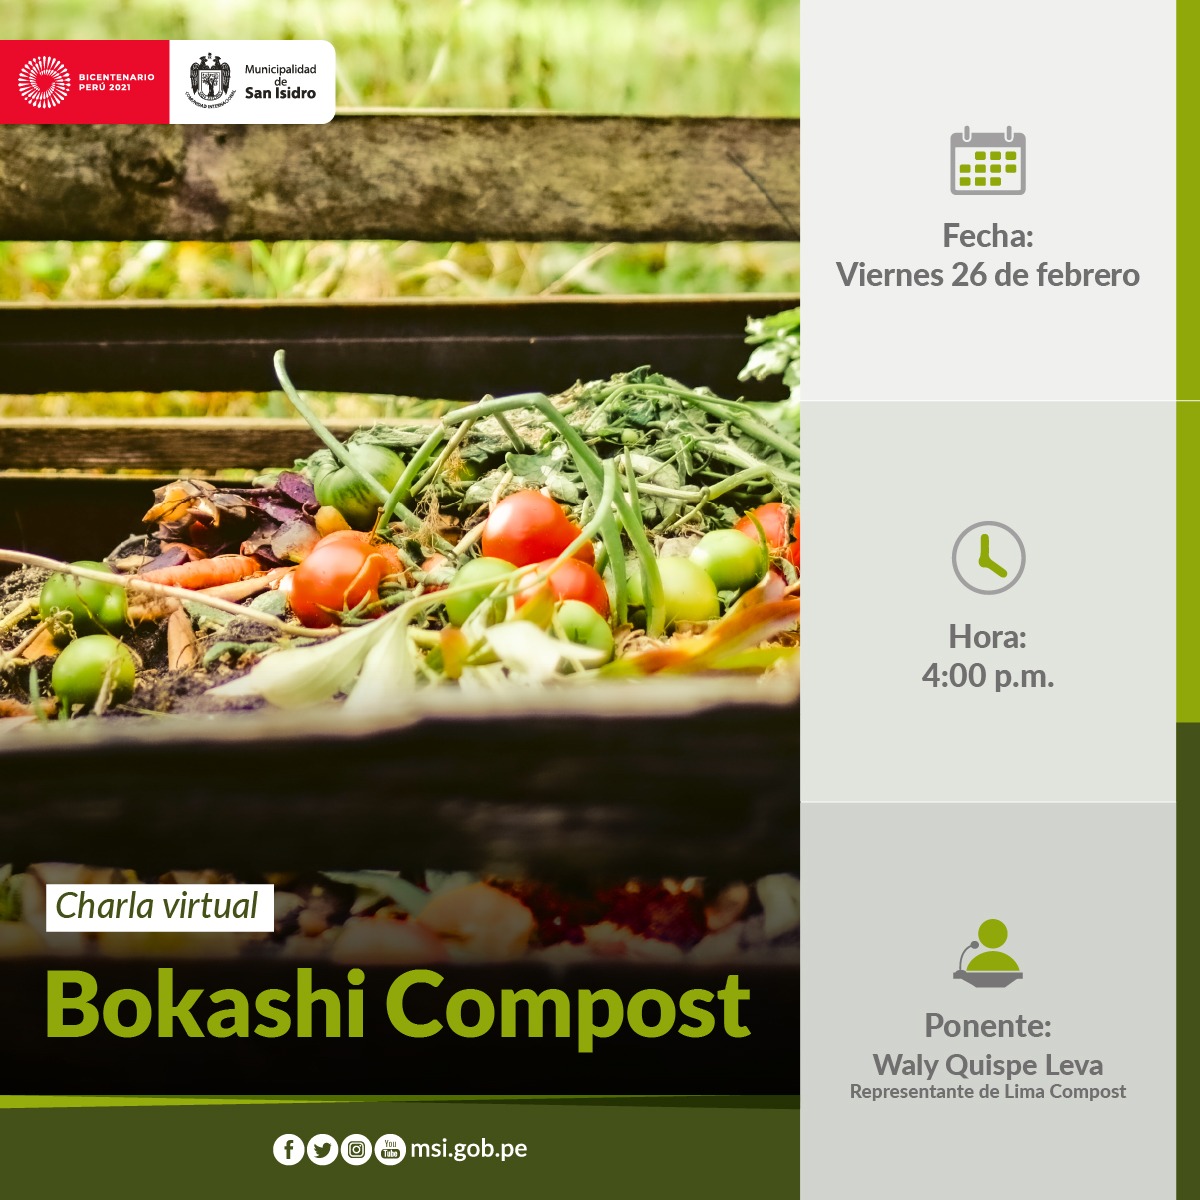 Bokashi Compost